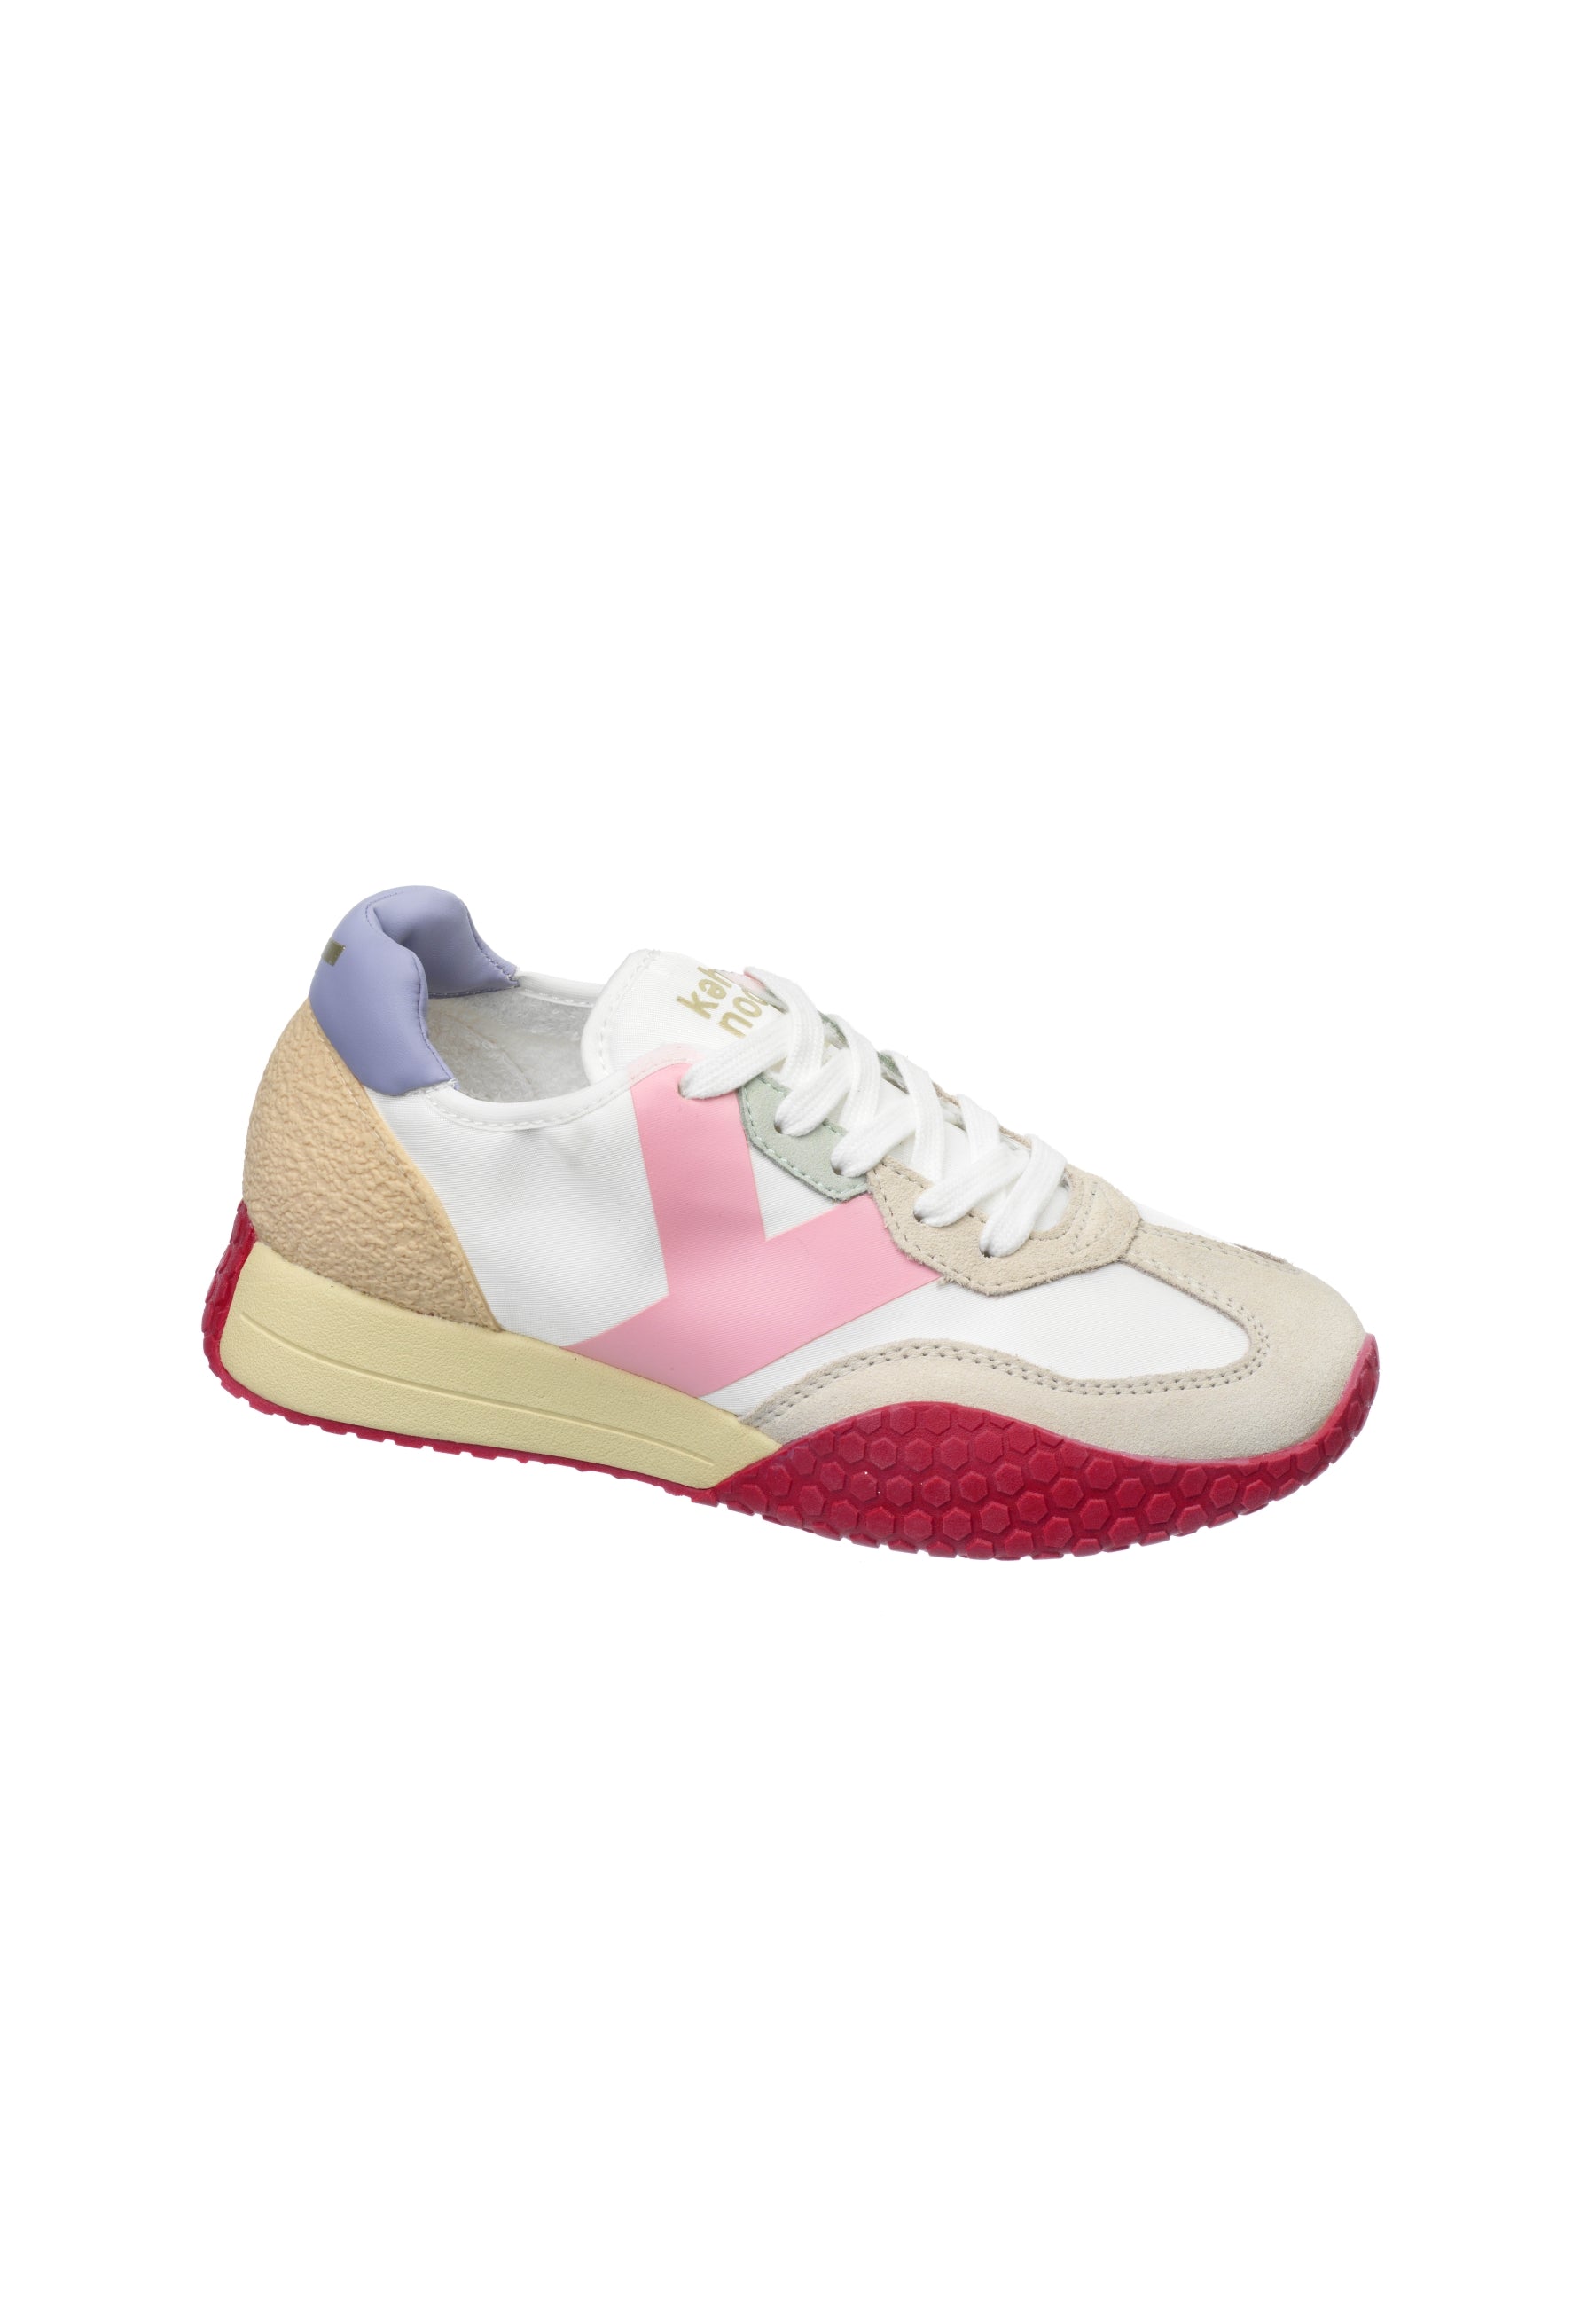 Ambassador in White/Pink/Lilla Sneakers Keh-Noo   